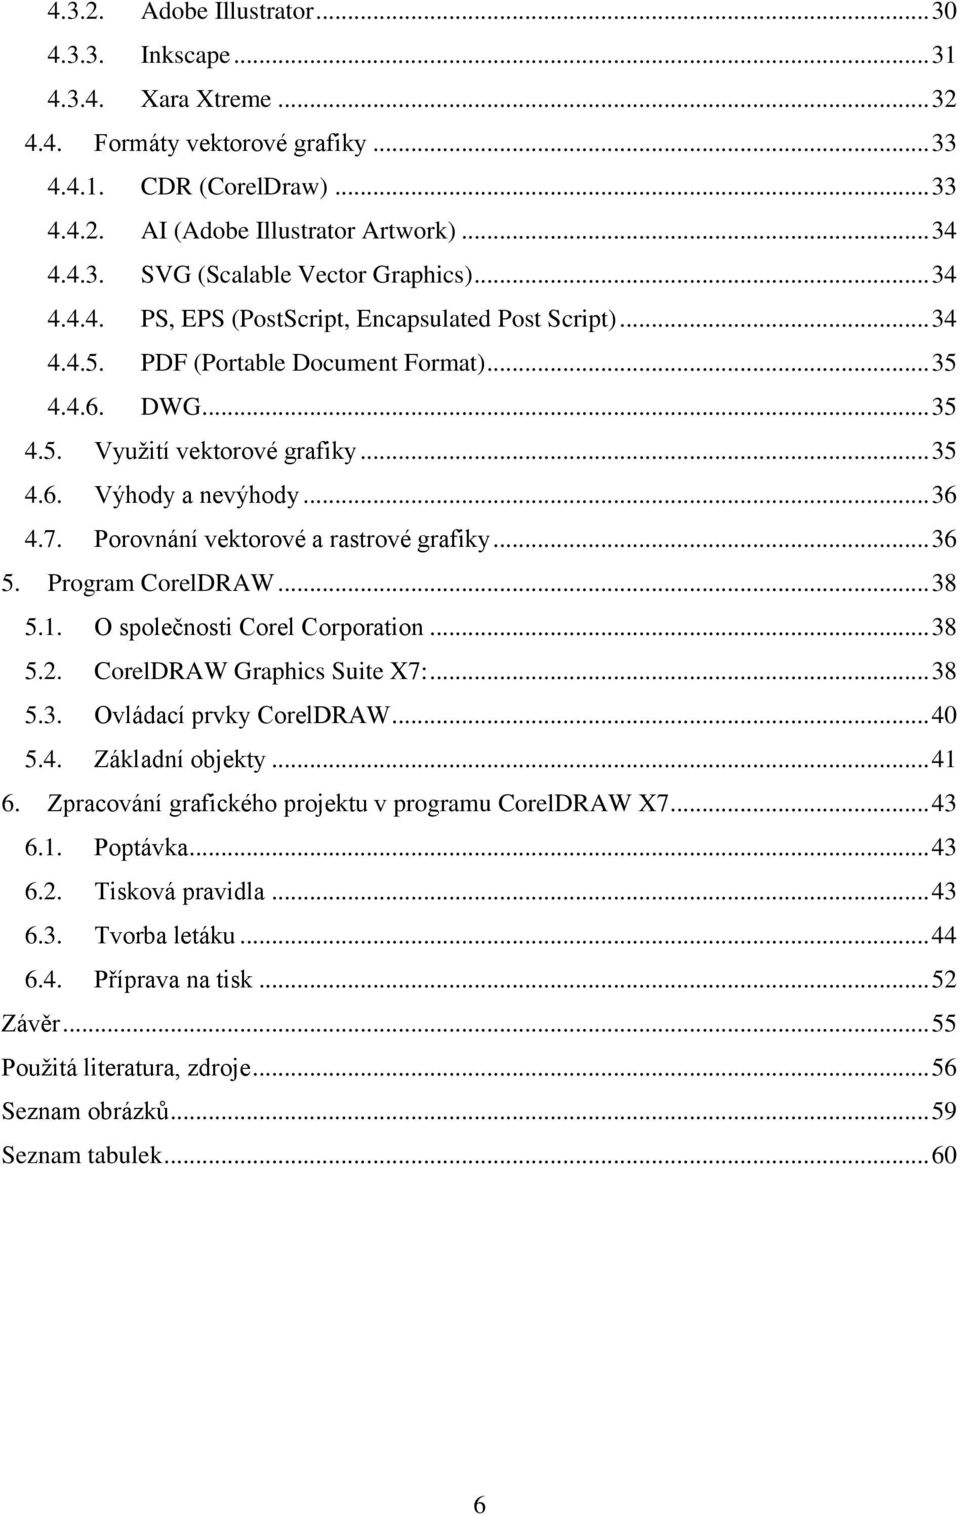 Porovnání vektorové a rastrové grafiky... 36 5. Program CorelDRAW... 38 5.1. O společnosti Corel Corporation... 38 5.2. CorelDRAW Graphics Suite X7:... 38 5.3. Ovládací prvky CorelDRAW... 40